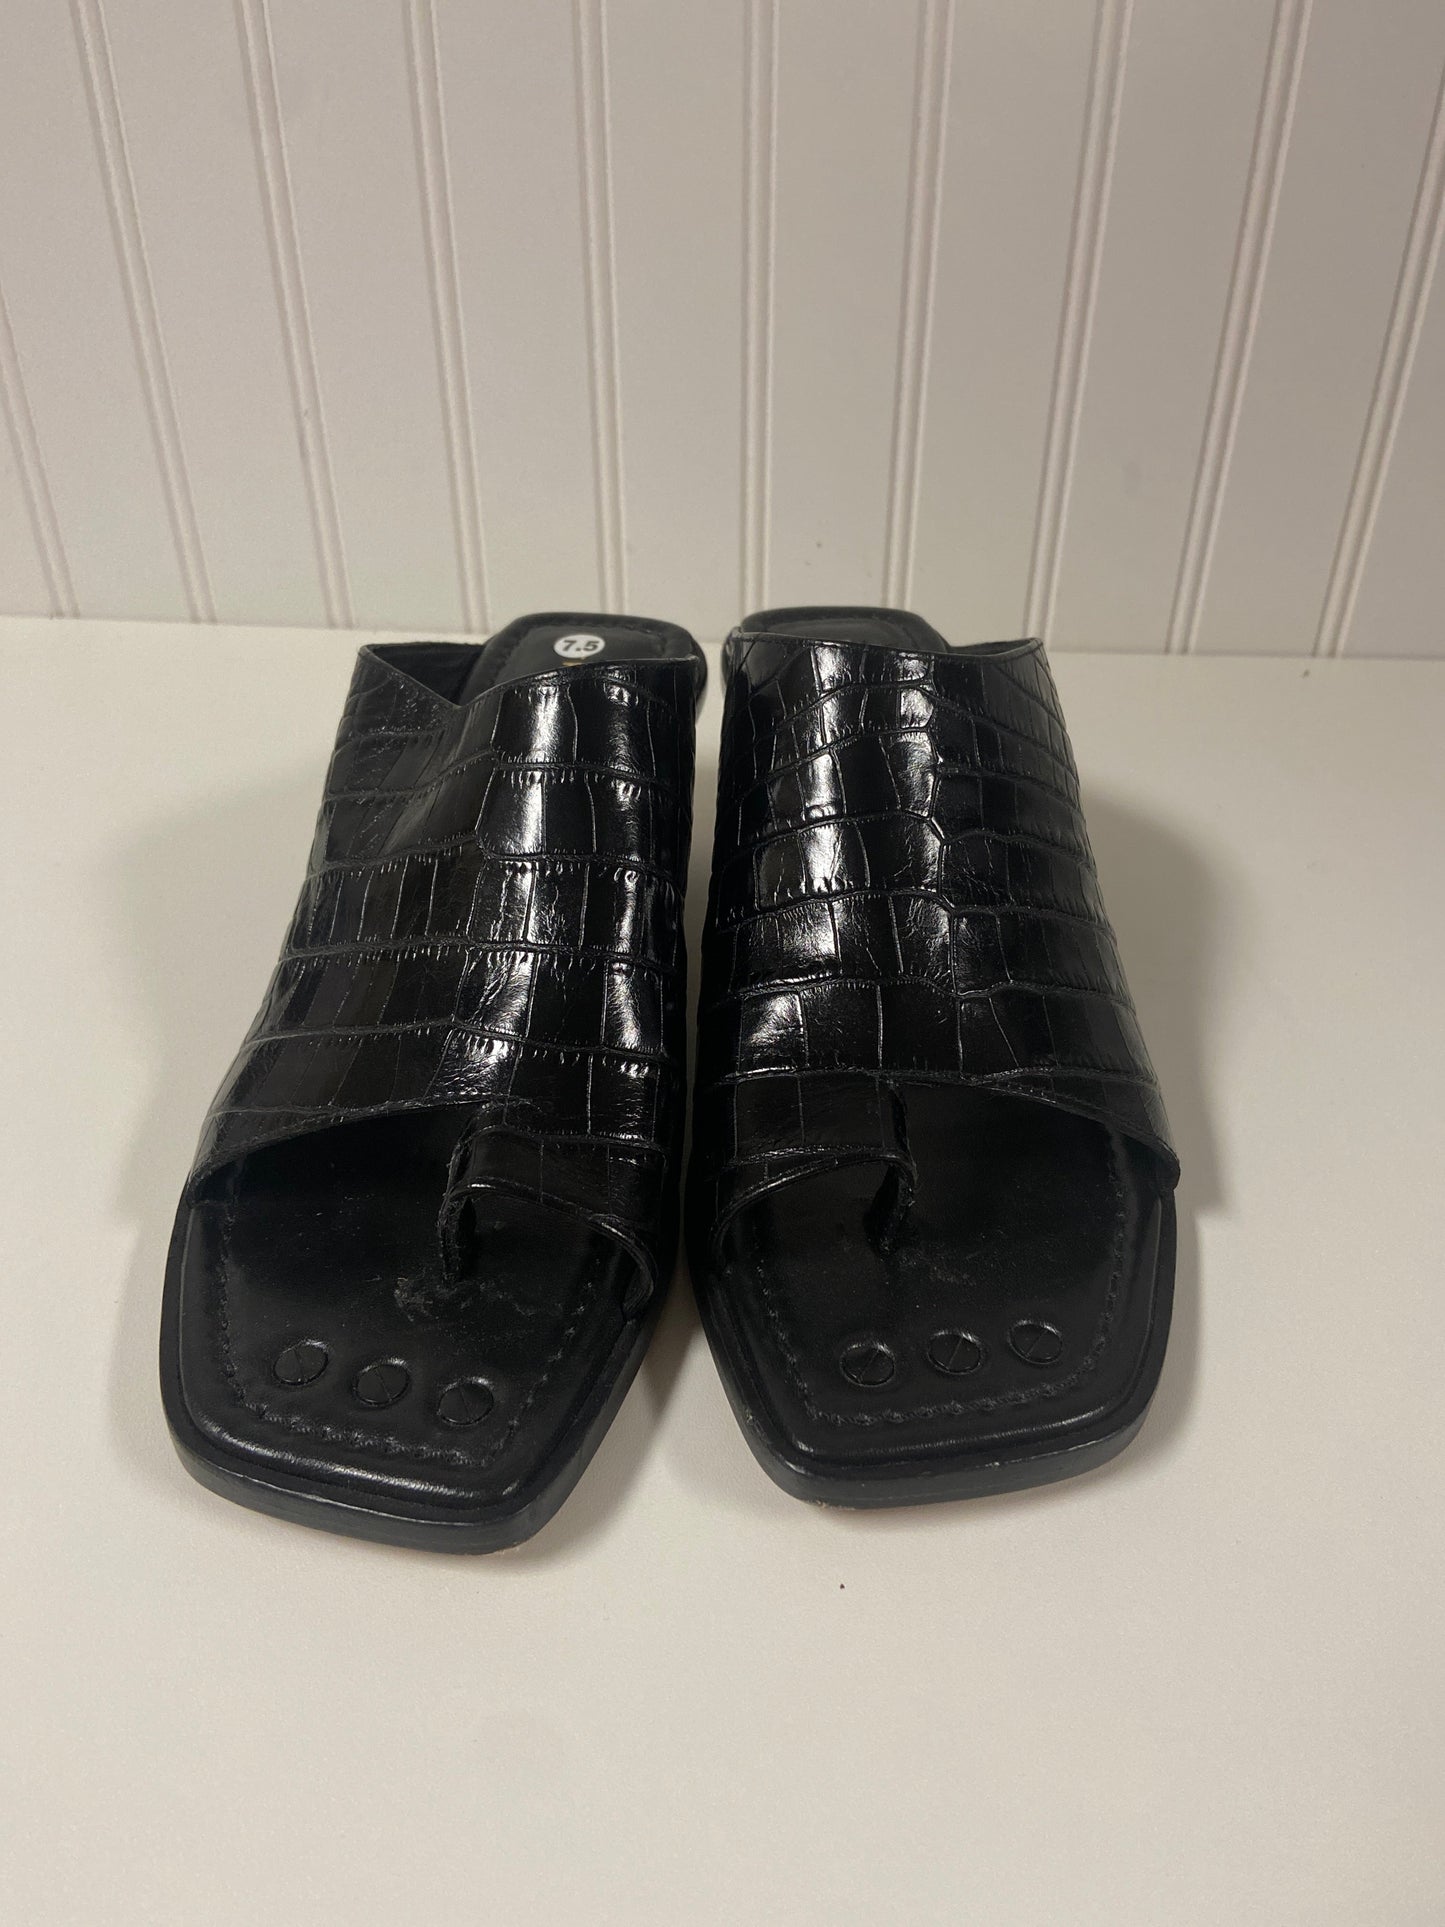 Black Sandals Heels Kitten Frame, Size 7.5